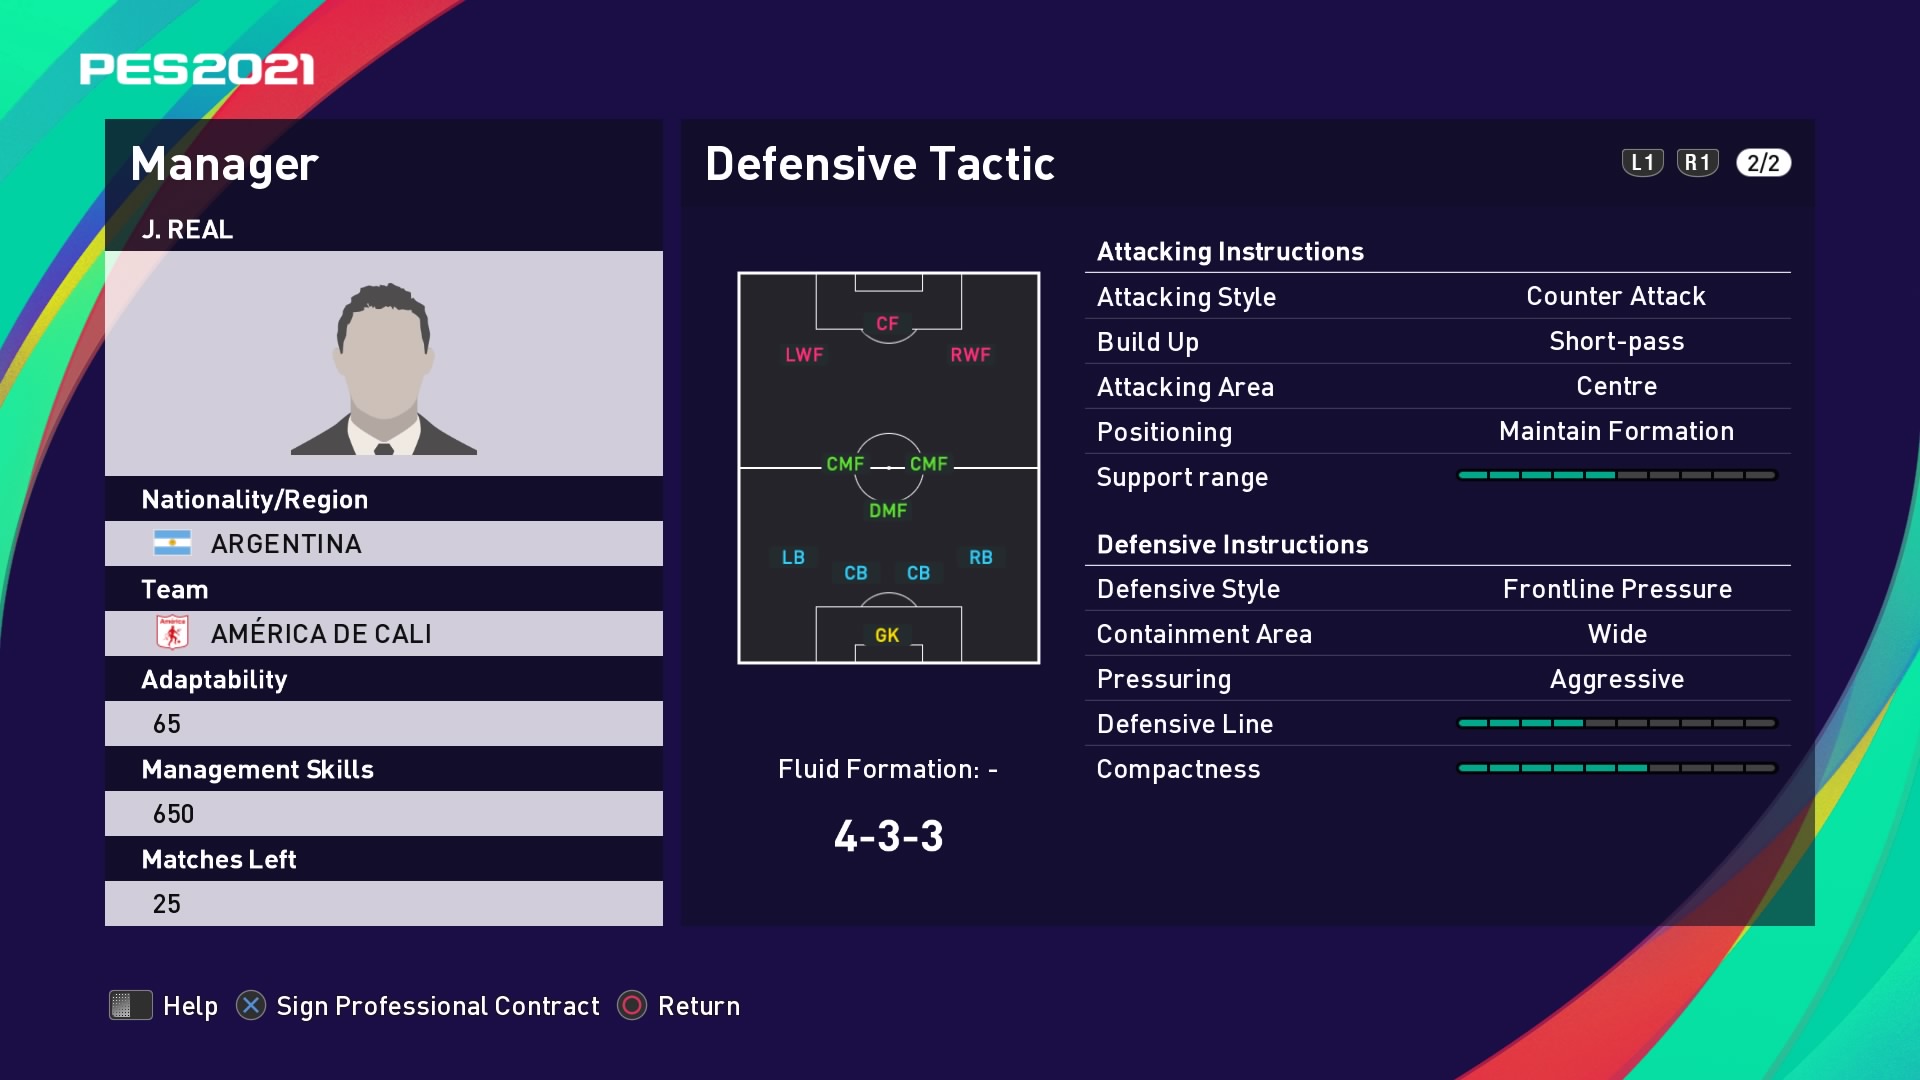 J. Real (Ricardo Gareca) Defensive Tactic in PES 2021 myClub